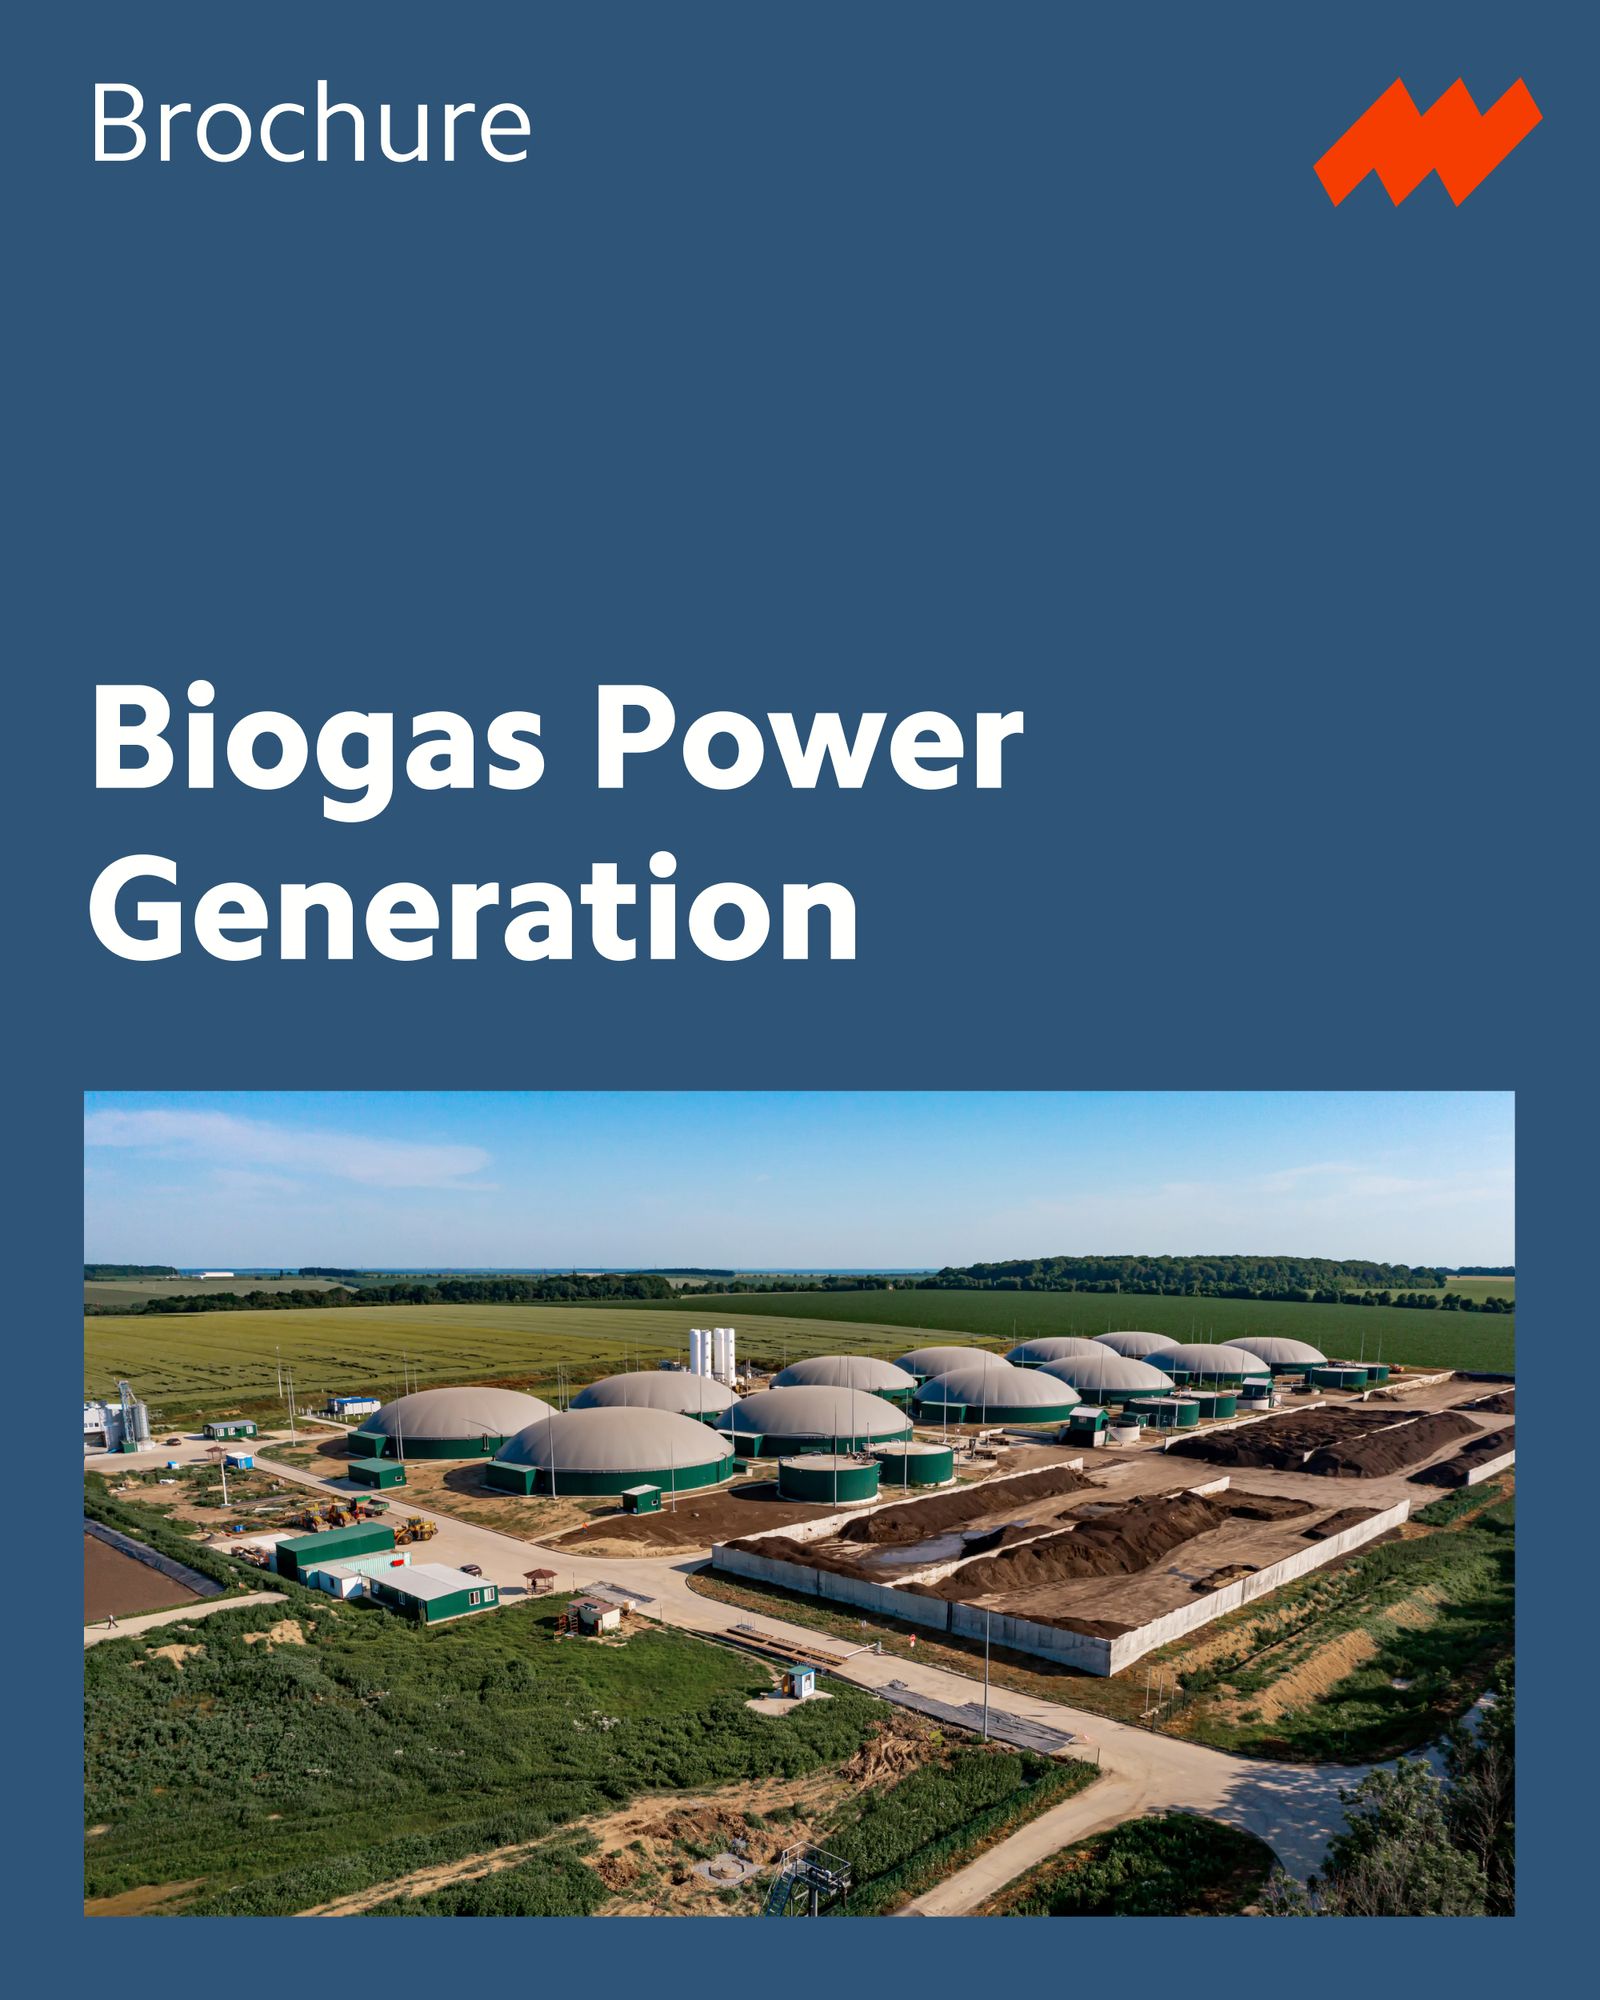 Brochure: Biogas Power Generation